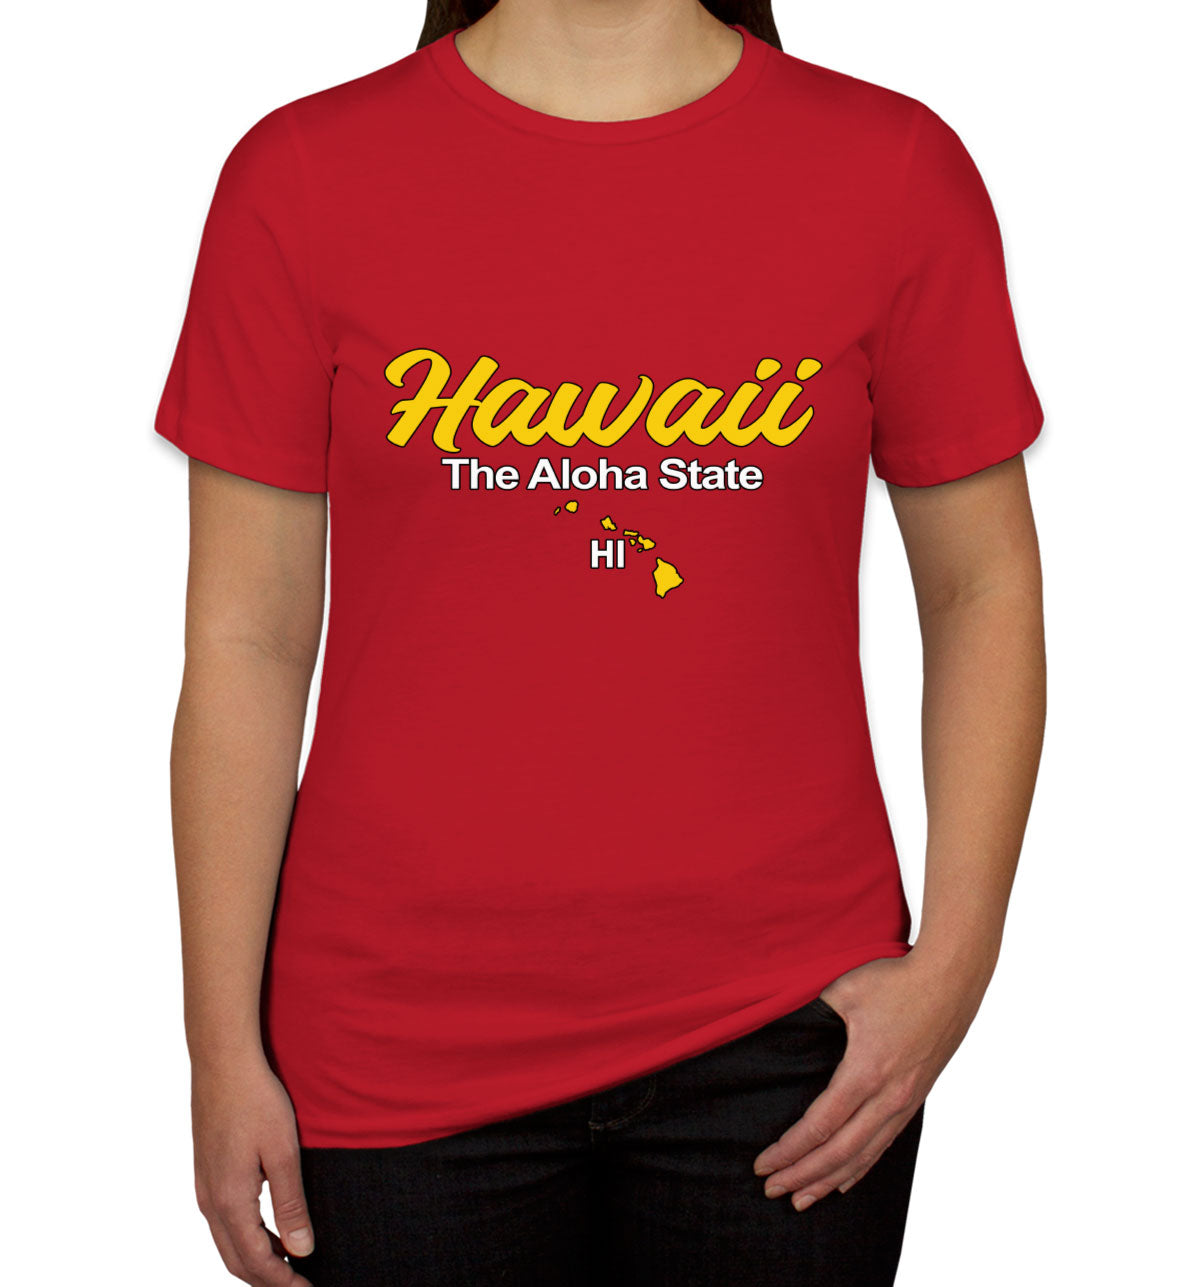 Hawaii The Aloha State Women's T-shirt